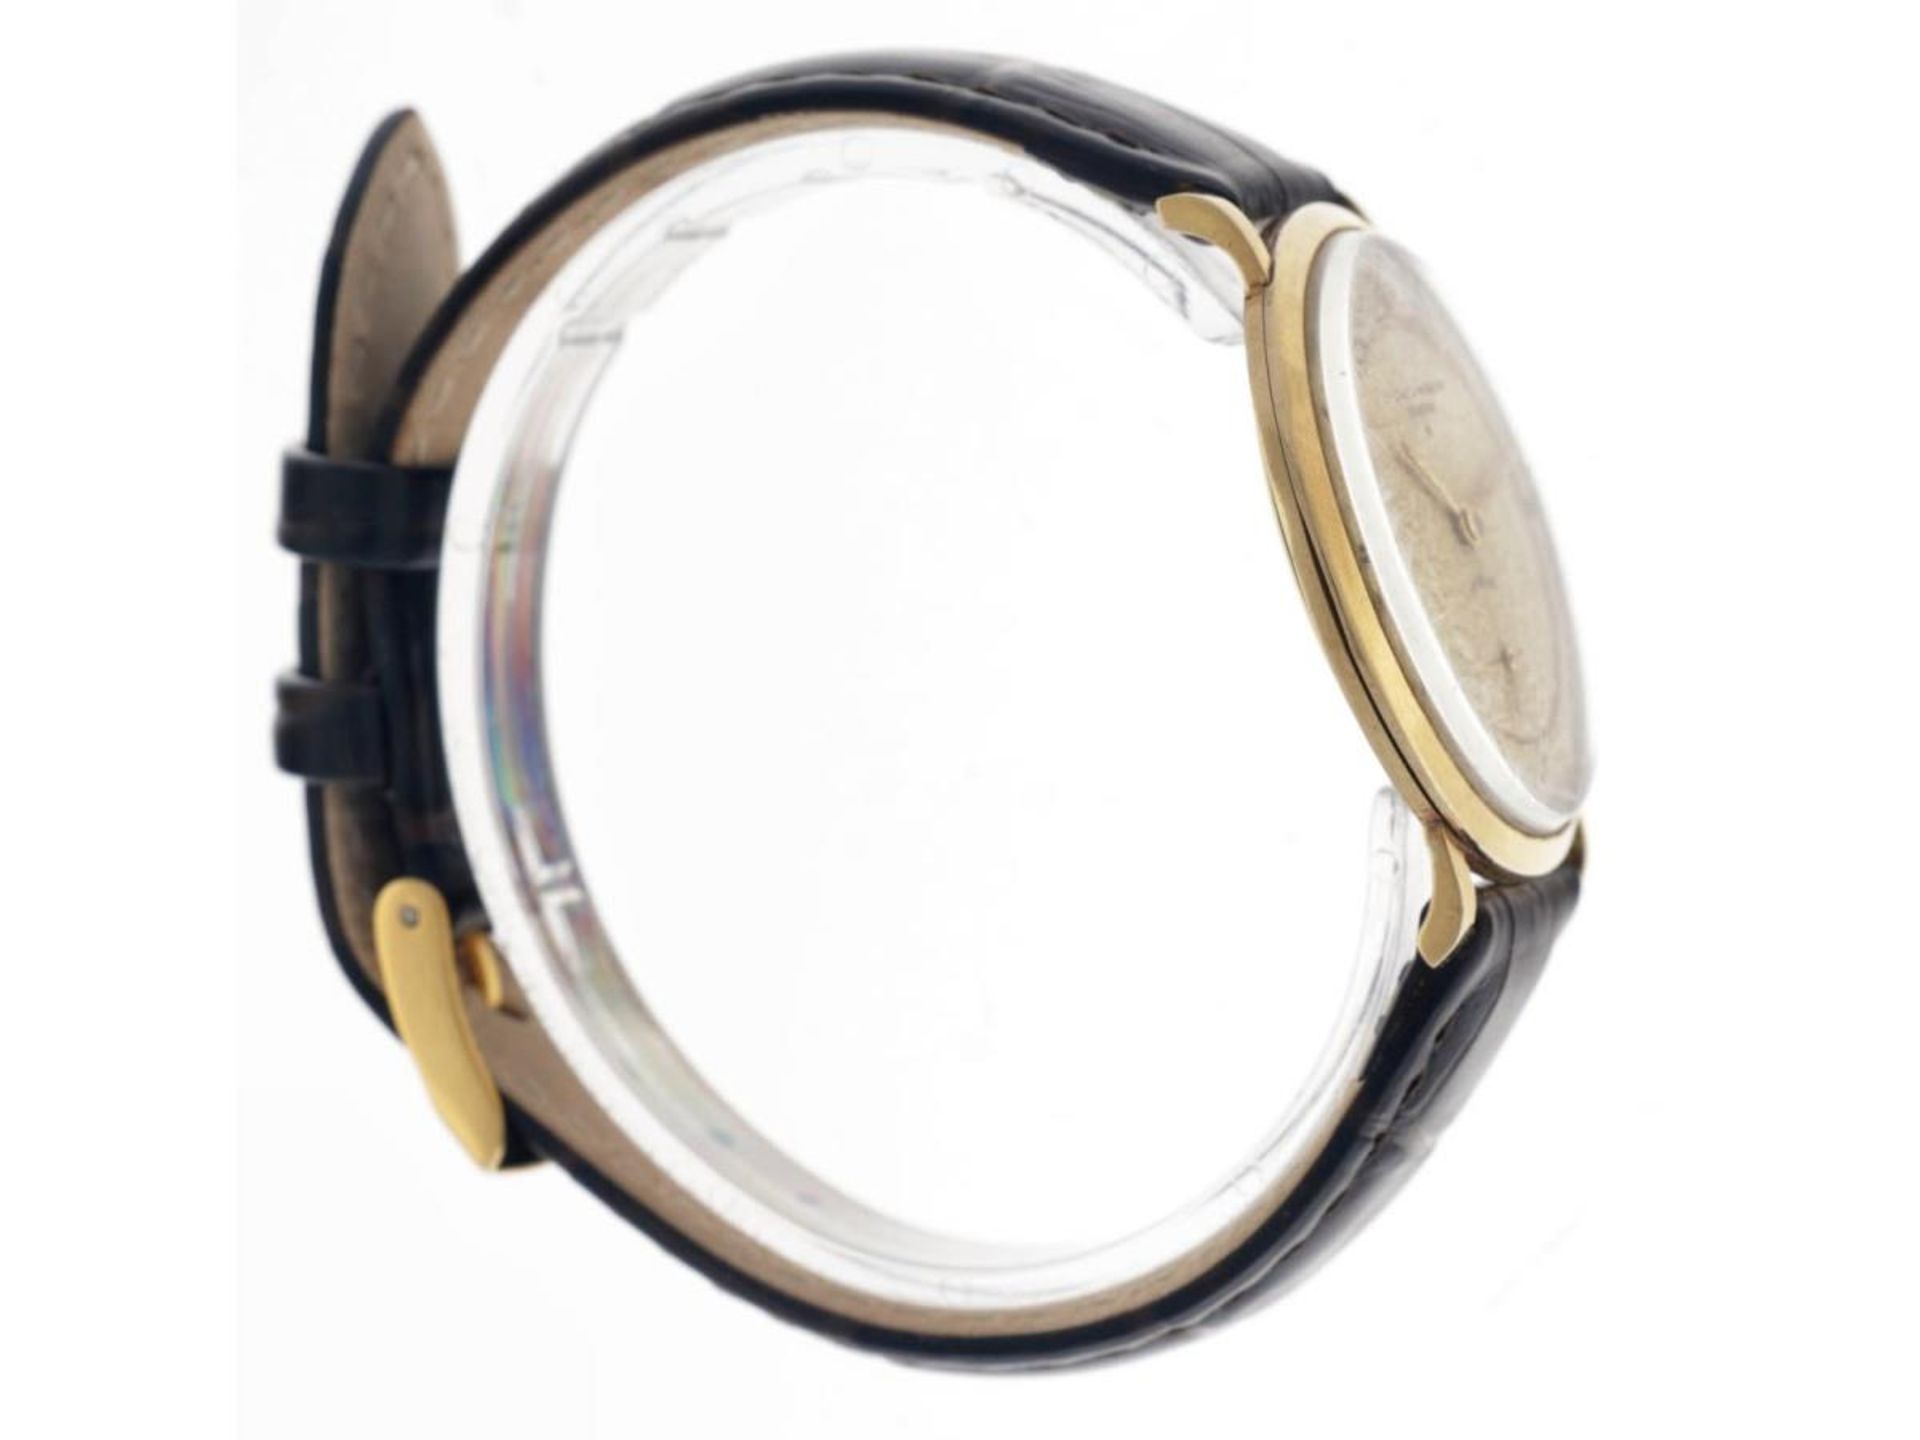 Baume & Mercier vintage 3568 - Men's watch - approx. 1950. - Image 8 of 12